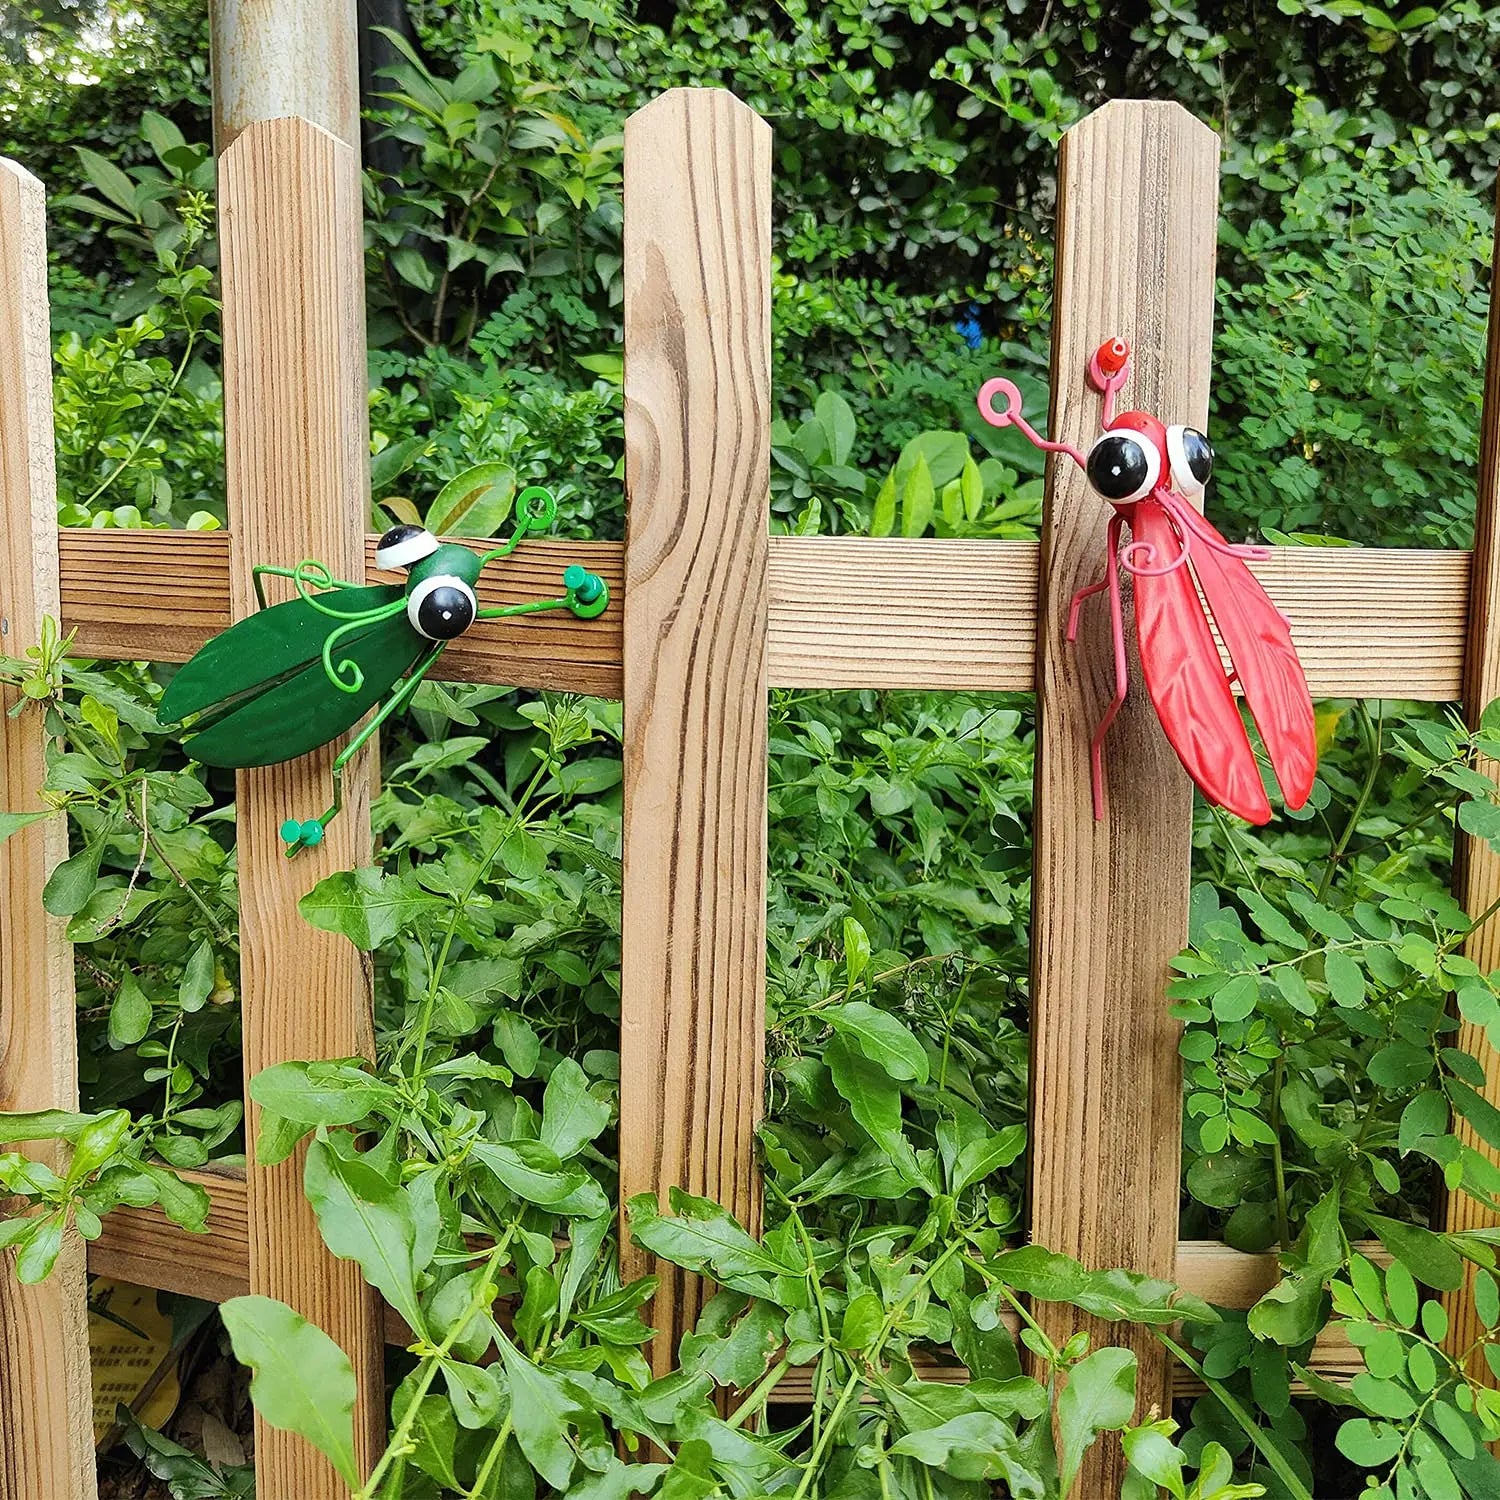 Cute Metal Grasshopper Figurine Decor Outdoor Tree Wall Art Garden Grasshopper Statues Decoration For Yard Patio Backyard